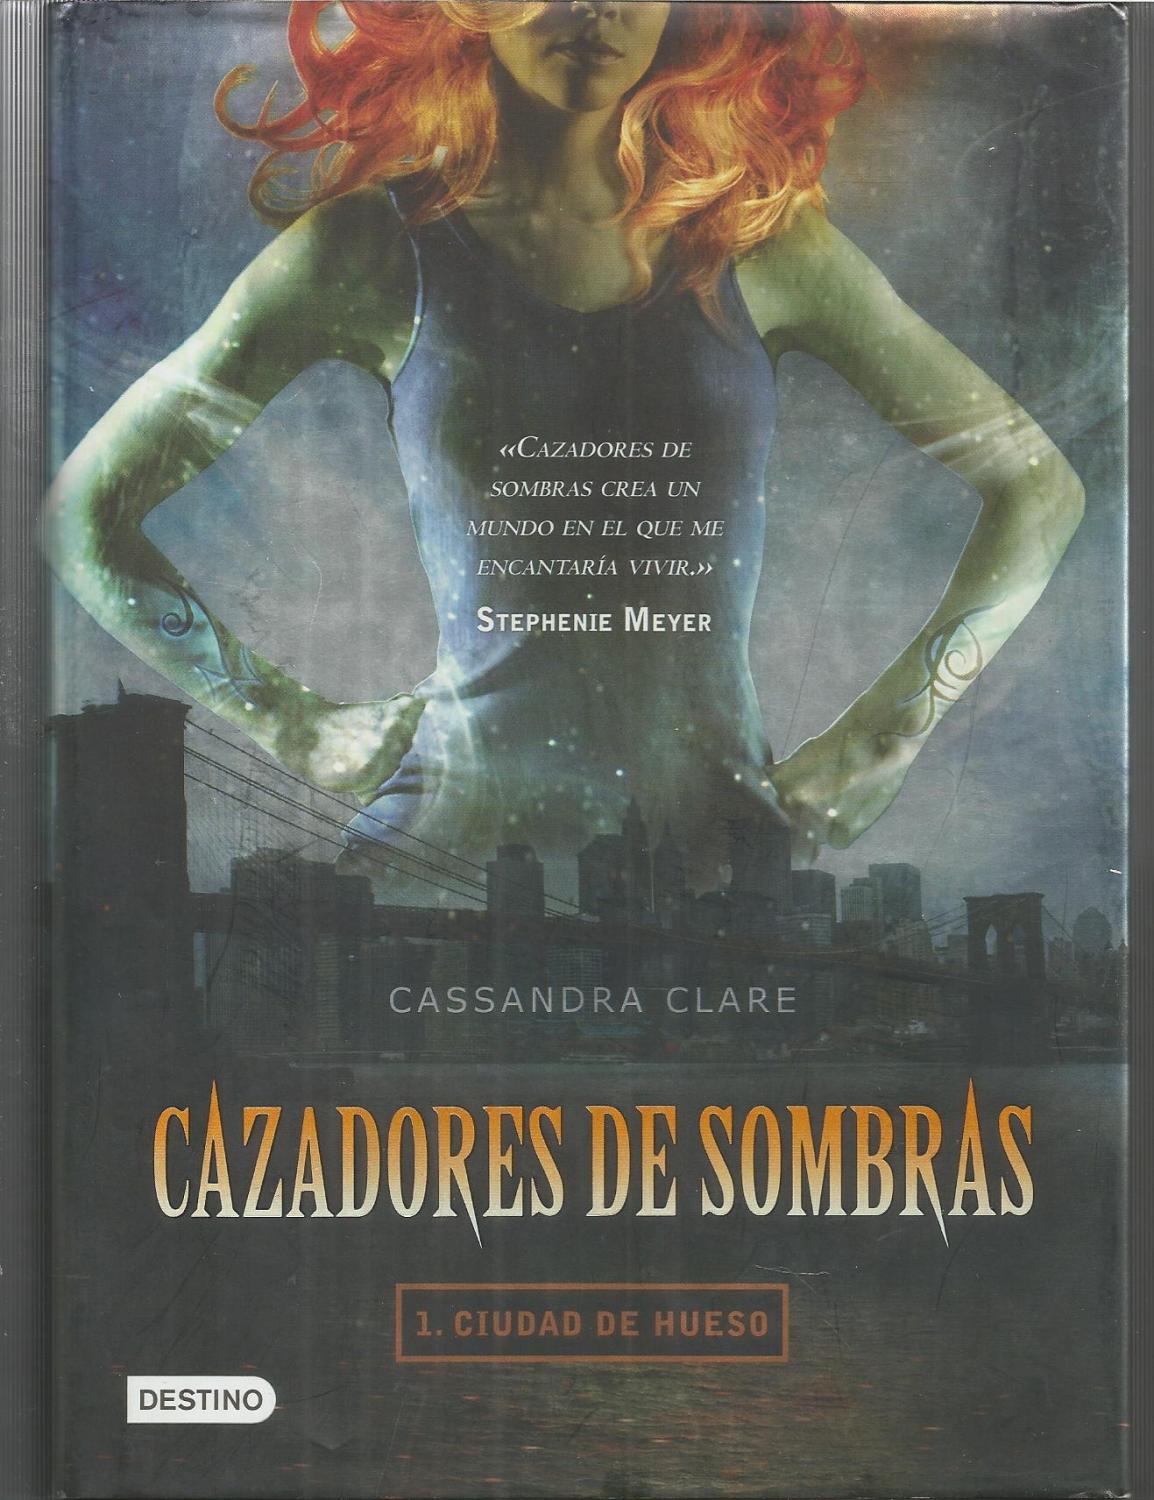 Escultura firma Kakadu CAZADORES DE SOMBRAS 1 -CIUDAD DE HUESO (Tapa dura) by CASSANDRA CLARE trad  Gemma Gallart: ESTADO COMO NUEVO (2009) | CALLE 59 Libros